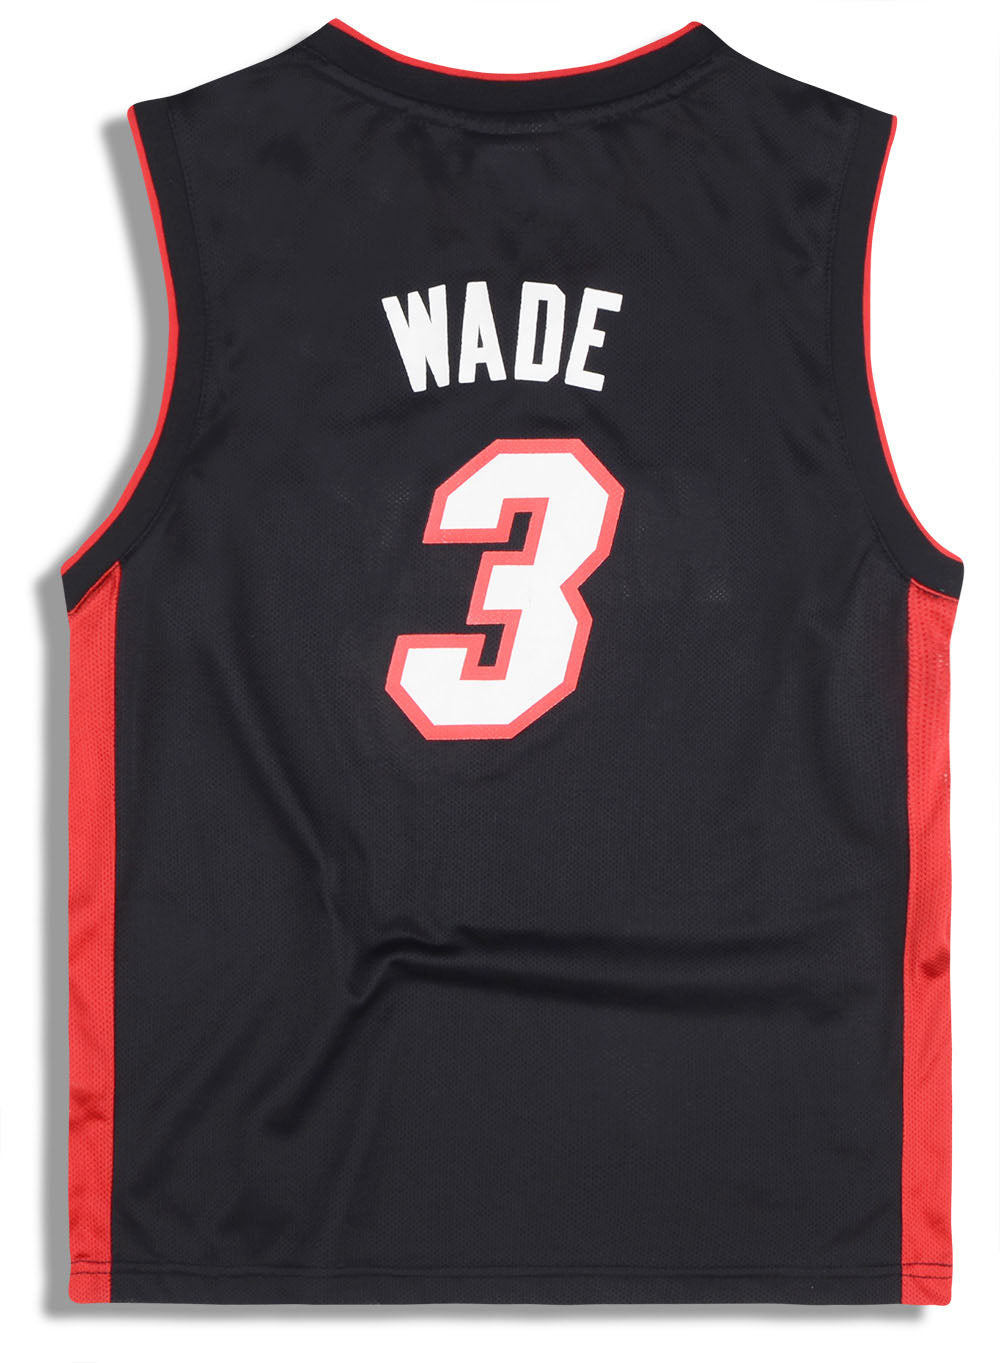 Dwyane Wade Authentic ABA Hardwood Classic Jersey - Black Adidas Heat Jersey